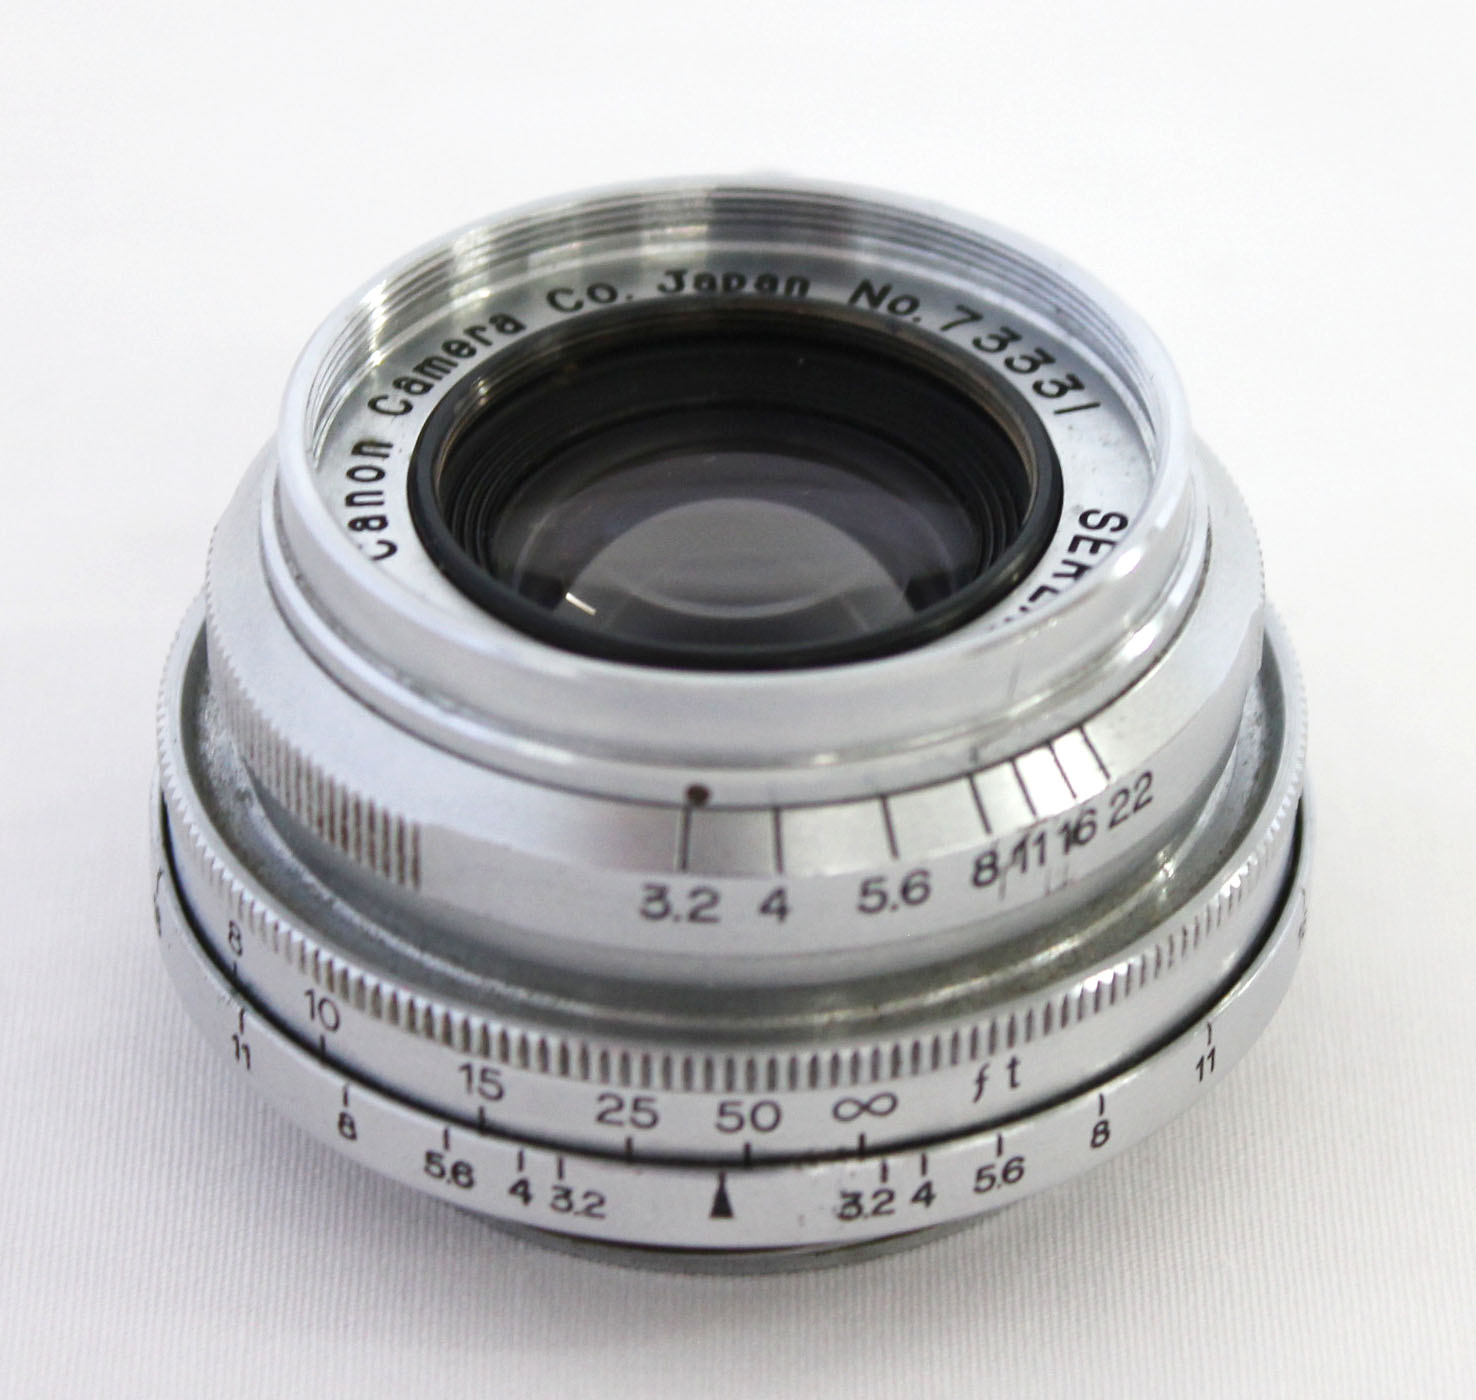 Canon Serenar 35mm F/3.2 L39 LTM Leica Thread Mount Lens from Japan Photo 4